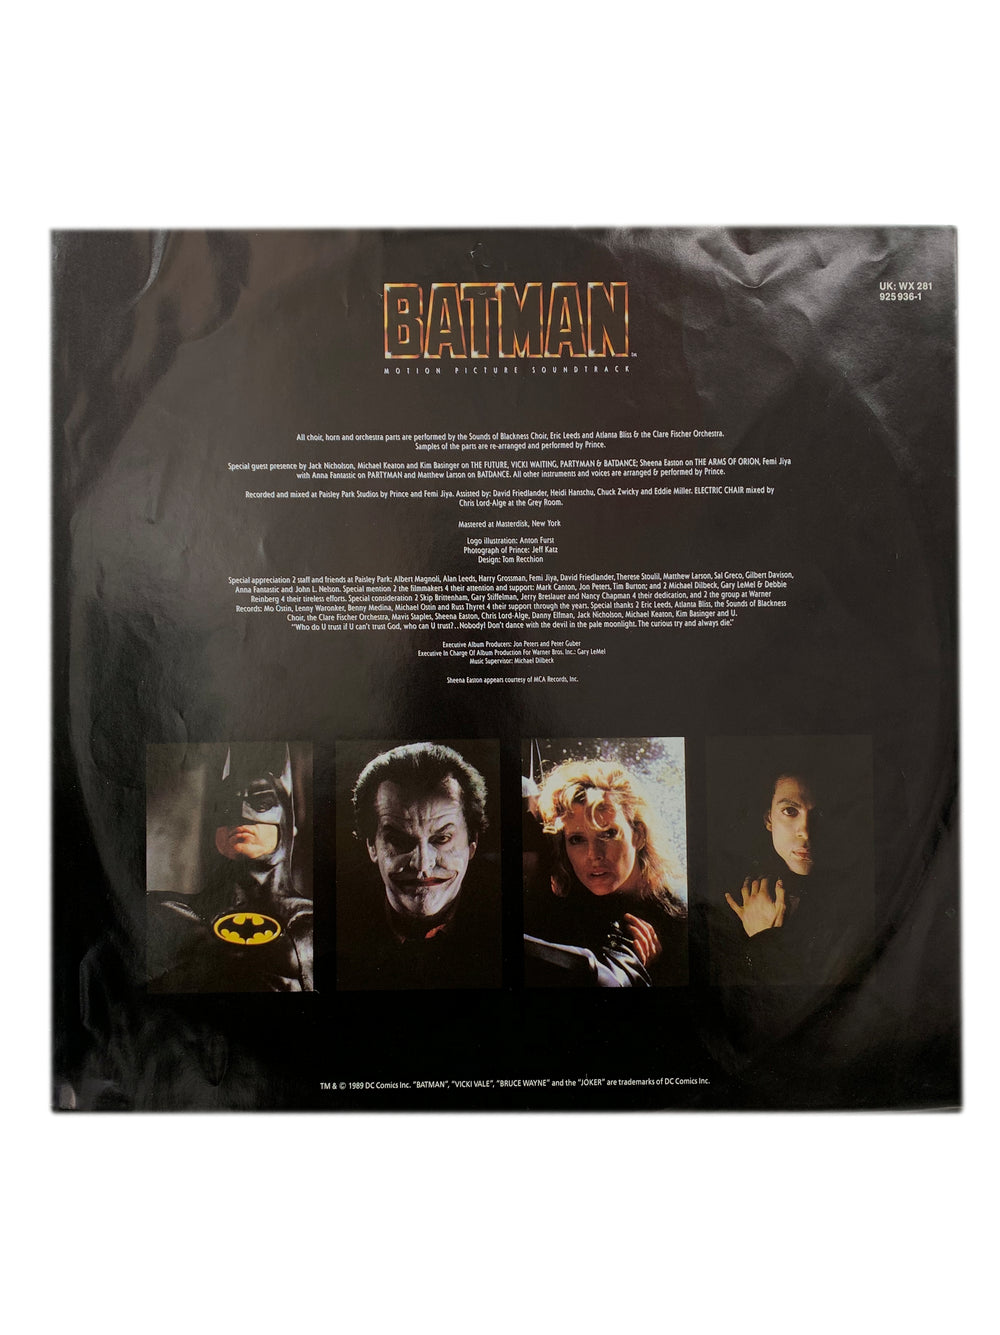 Prince – Batman Soundtrack UK VINYL Album Original 1989 Hype Sticker WX281 Preloved: 1990